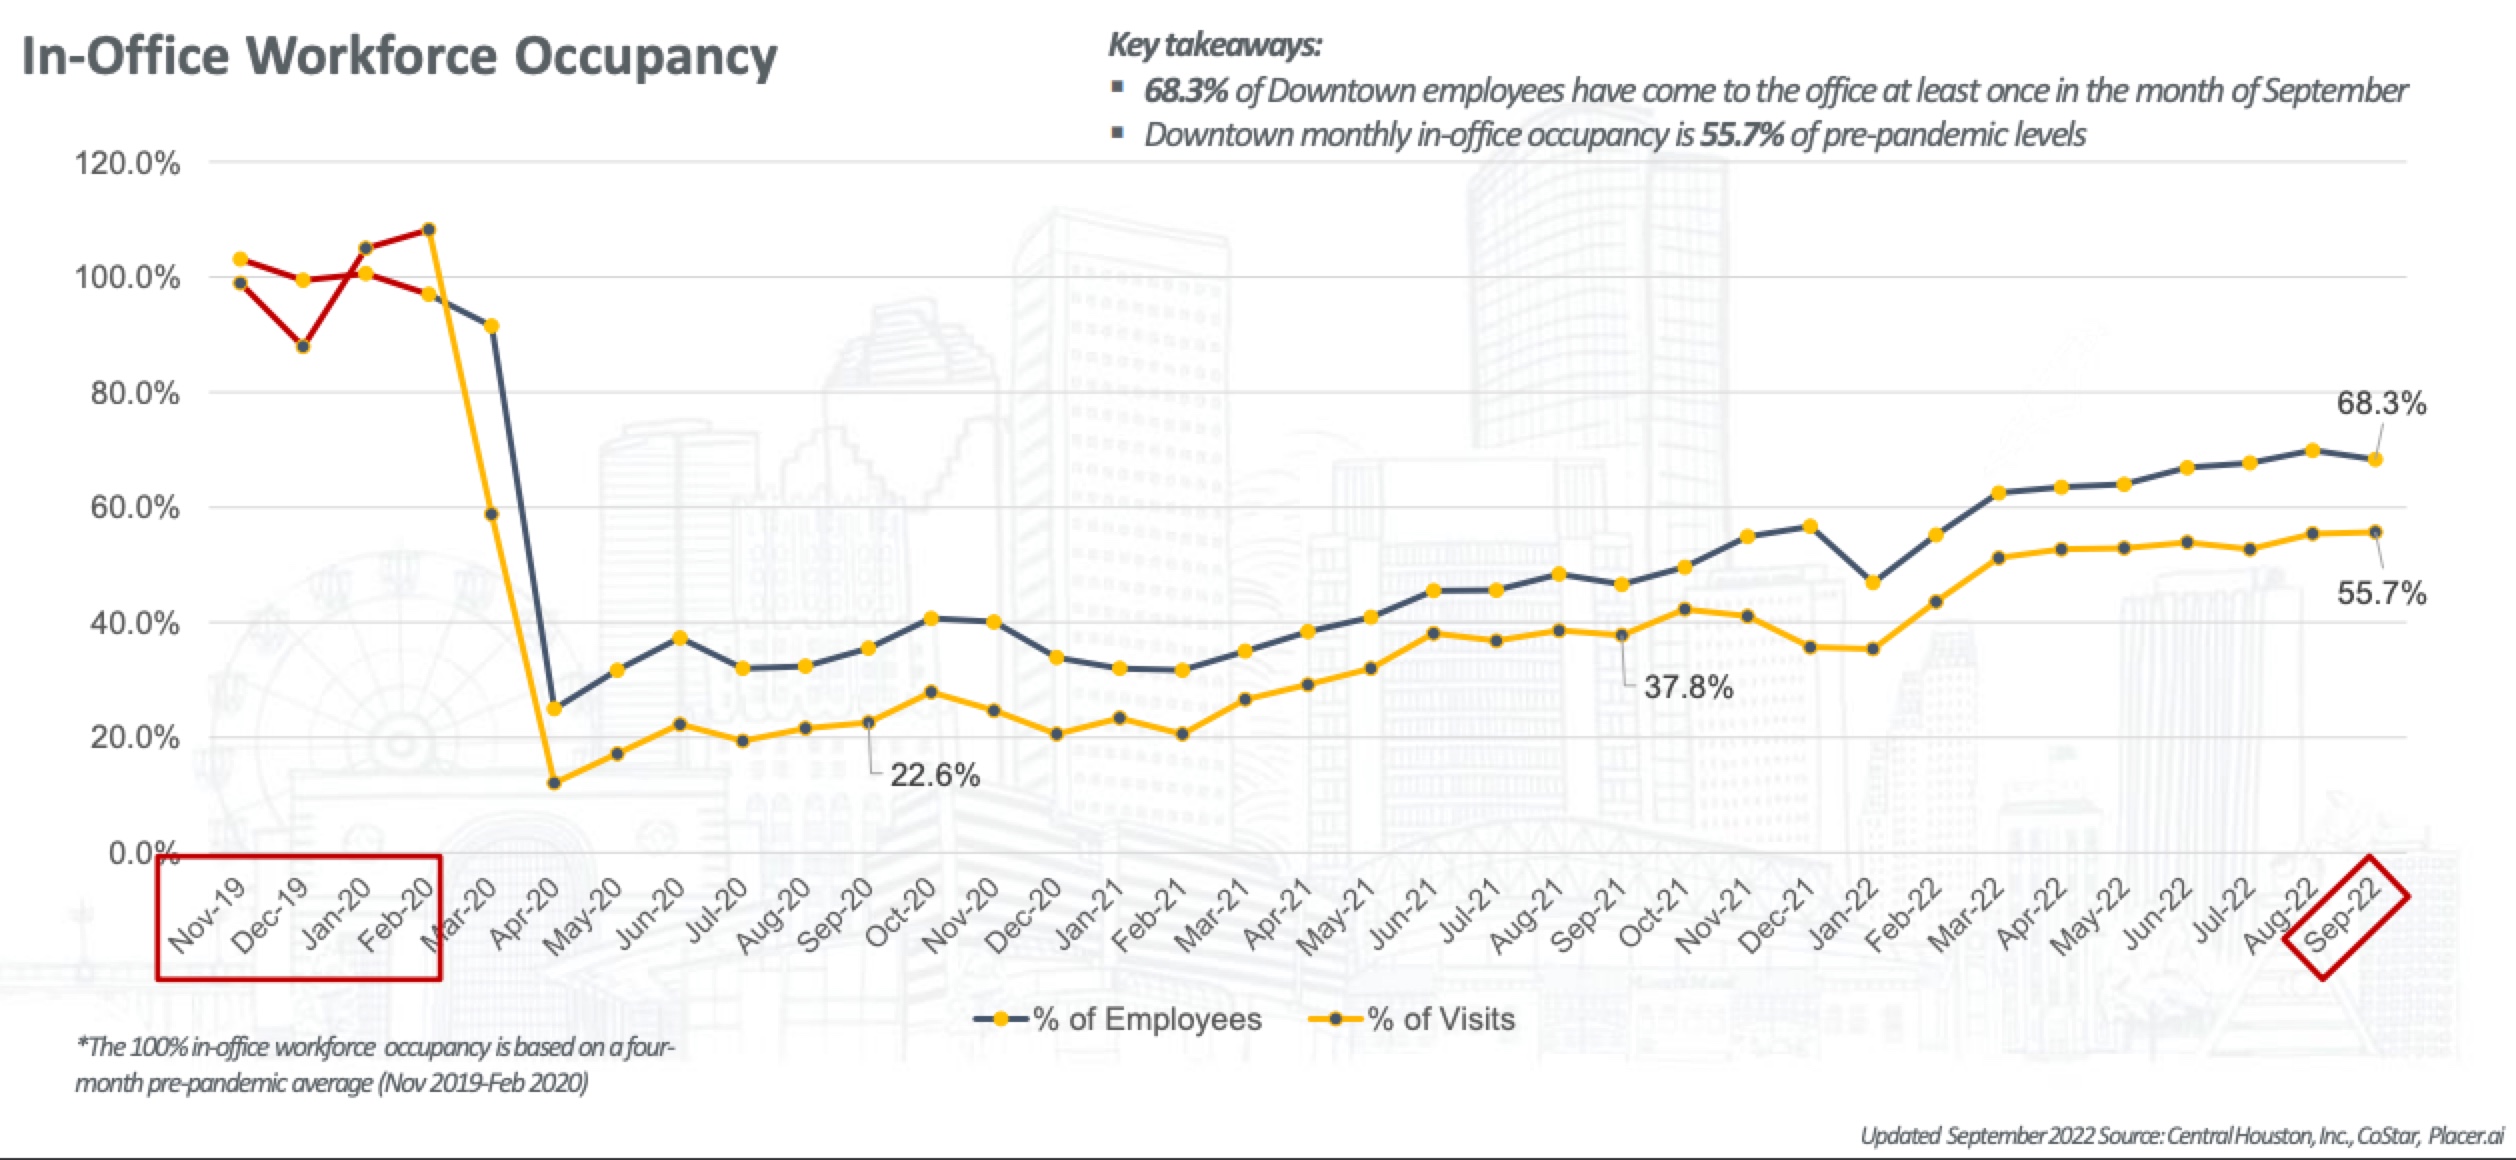 In-office workforce occupancy